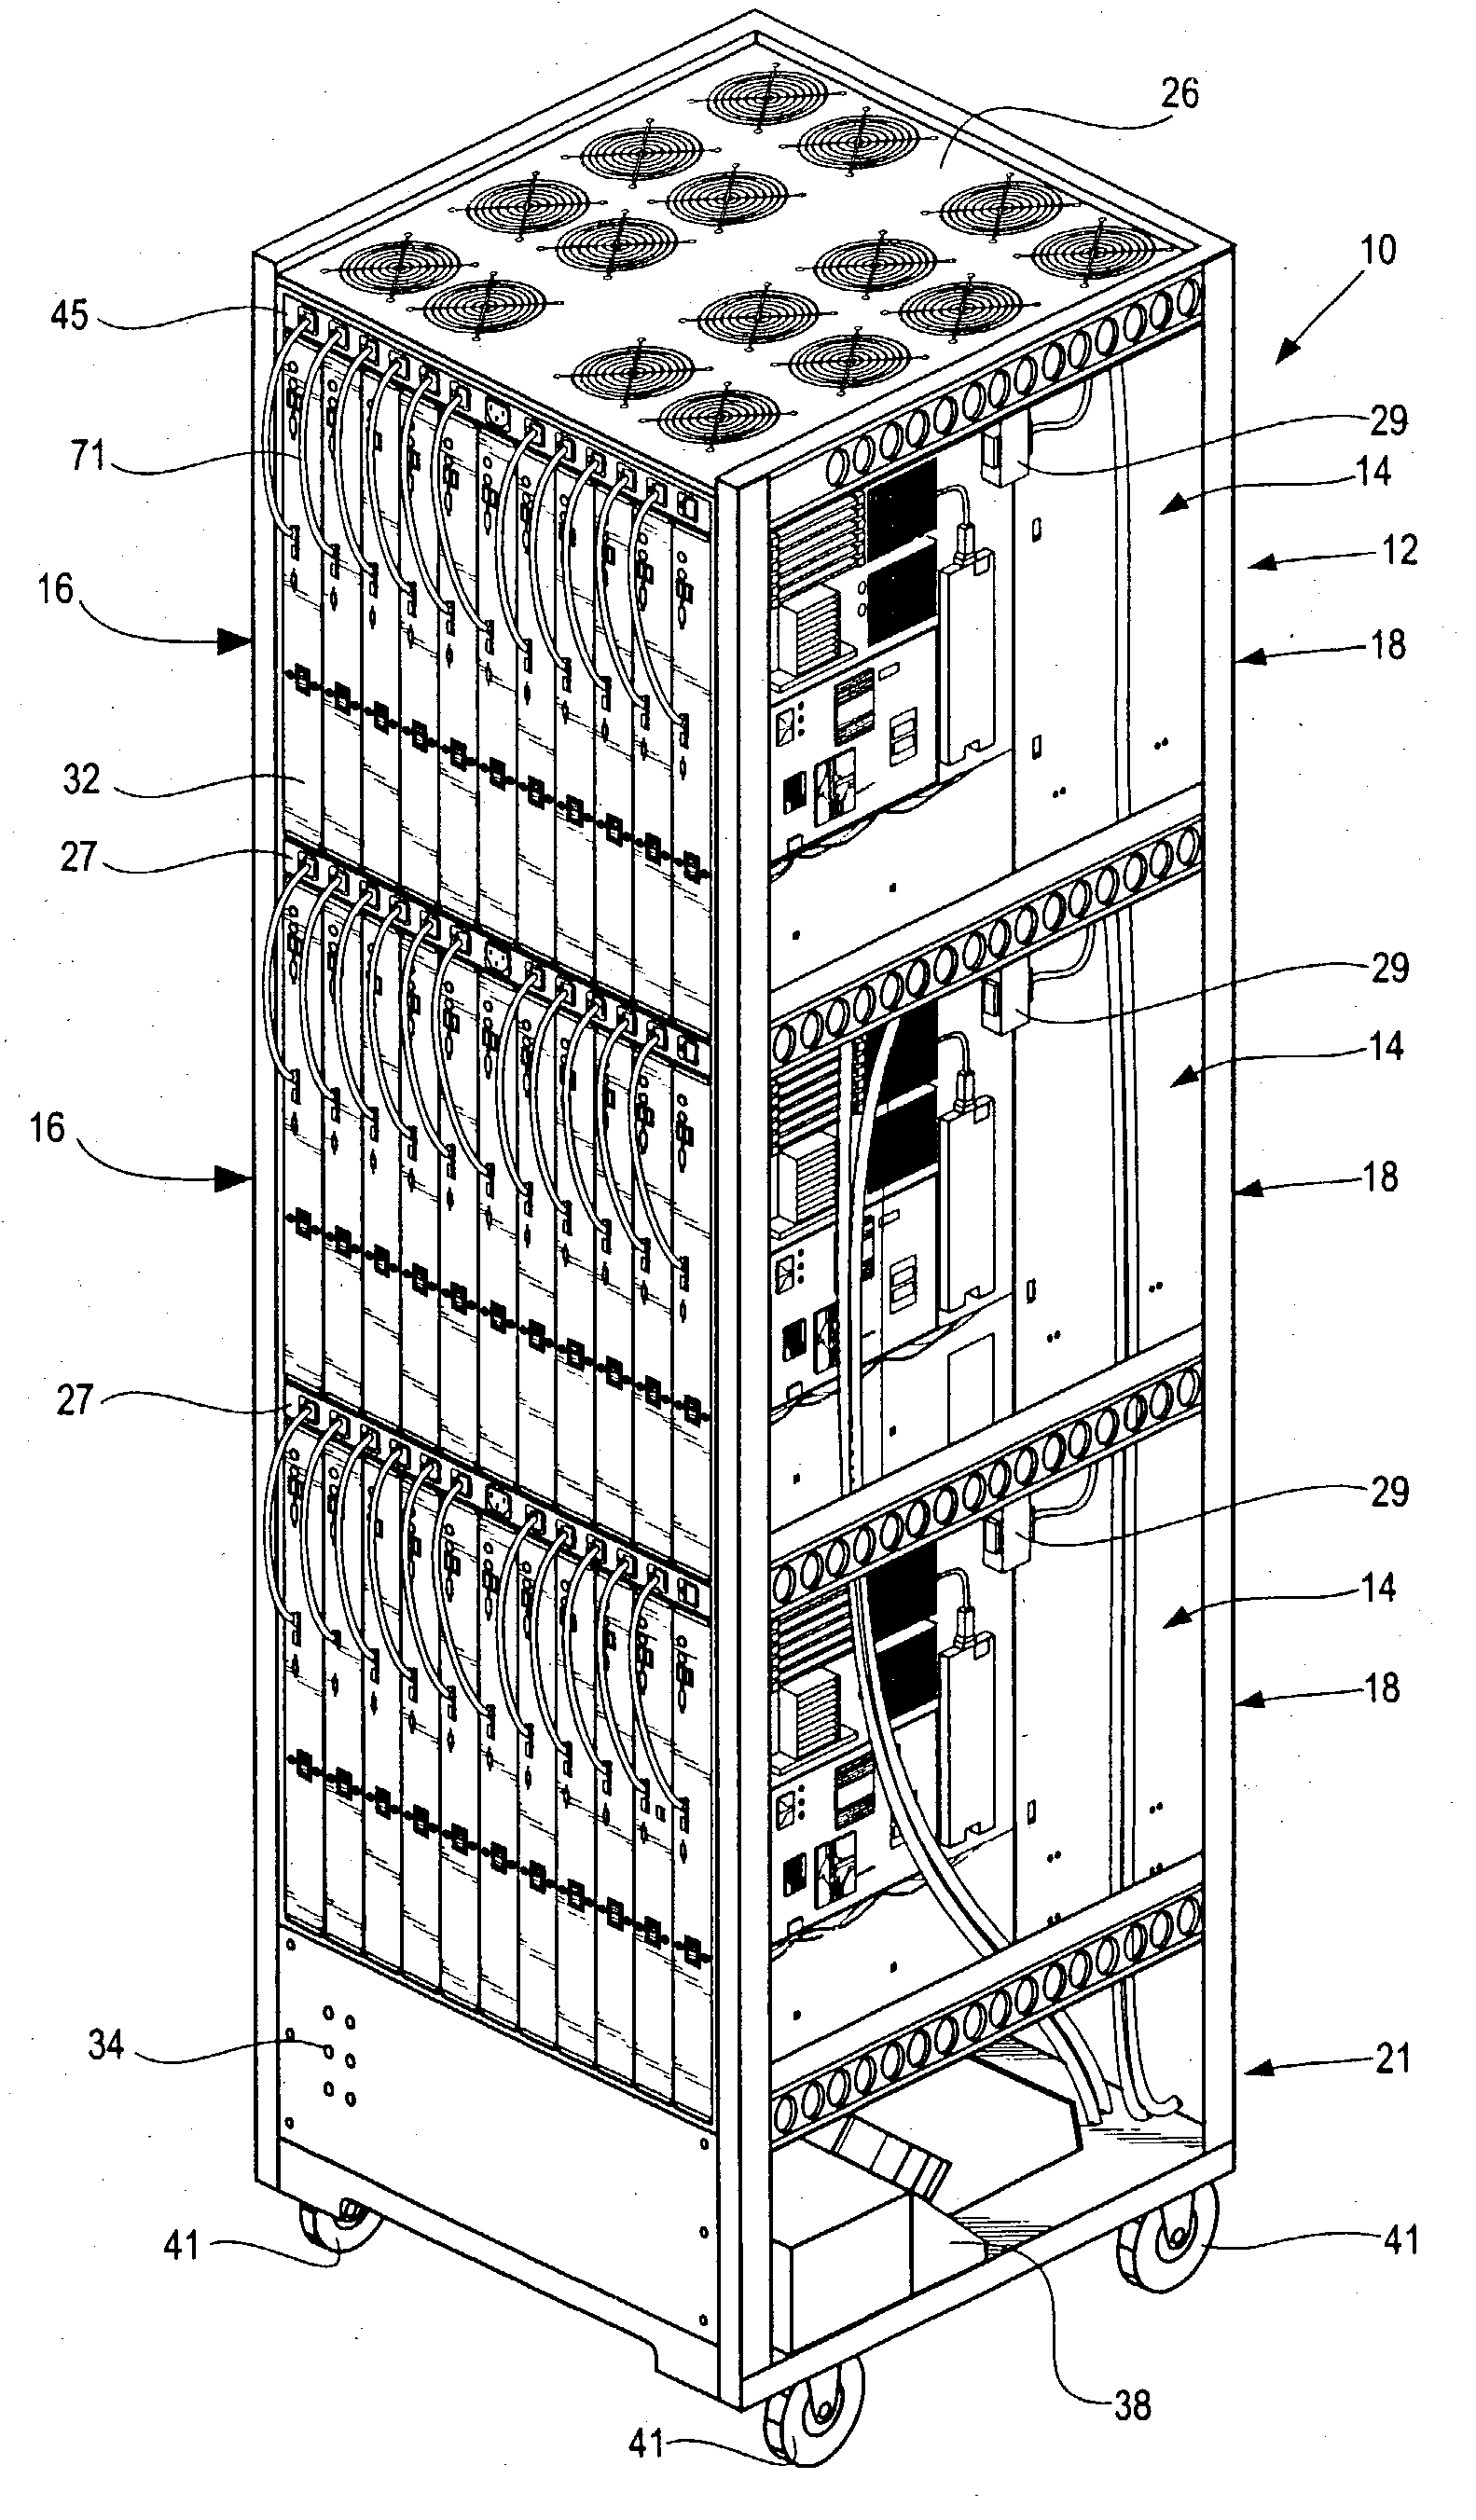 Rack mountable computer component fan cooling arrangement and method